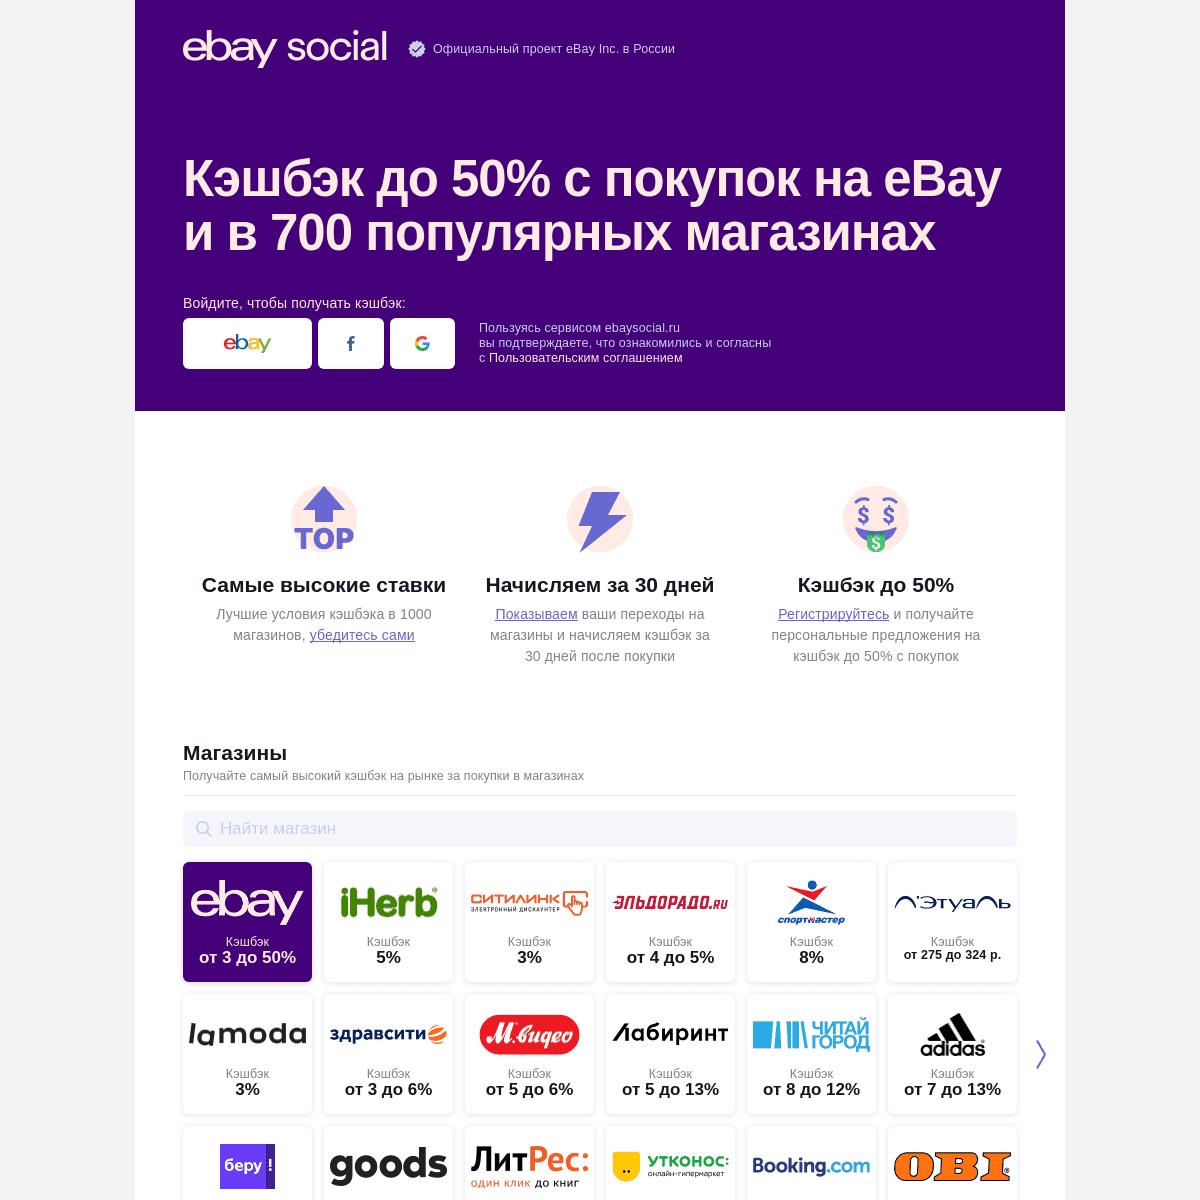 A complete backup of ebaysocial.ru